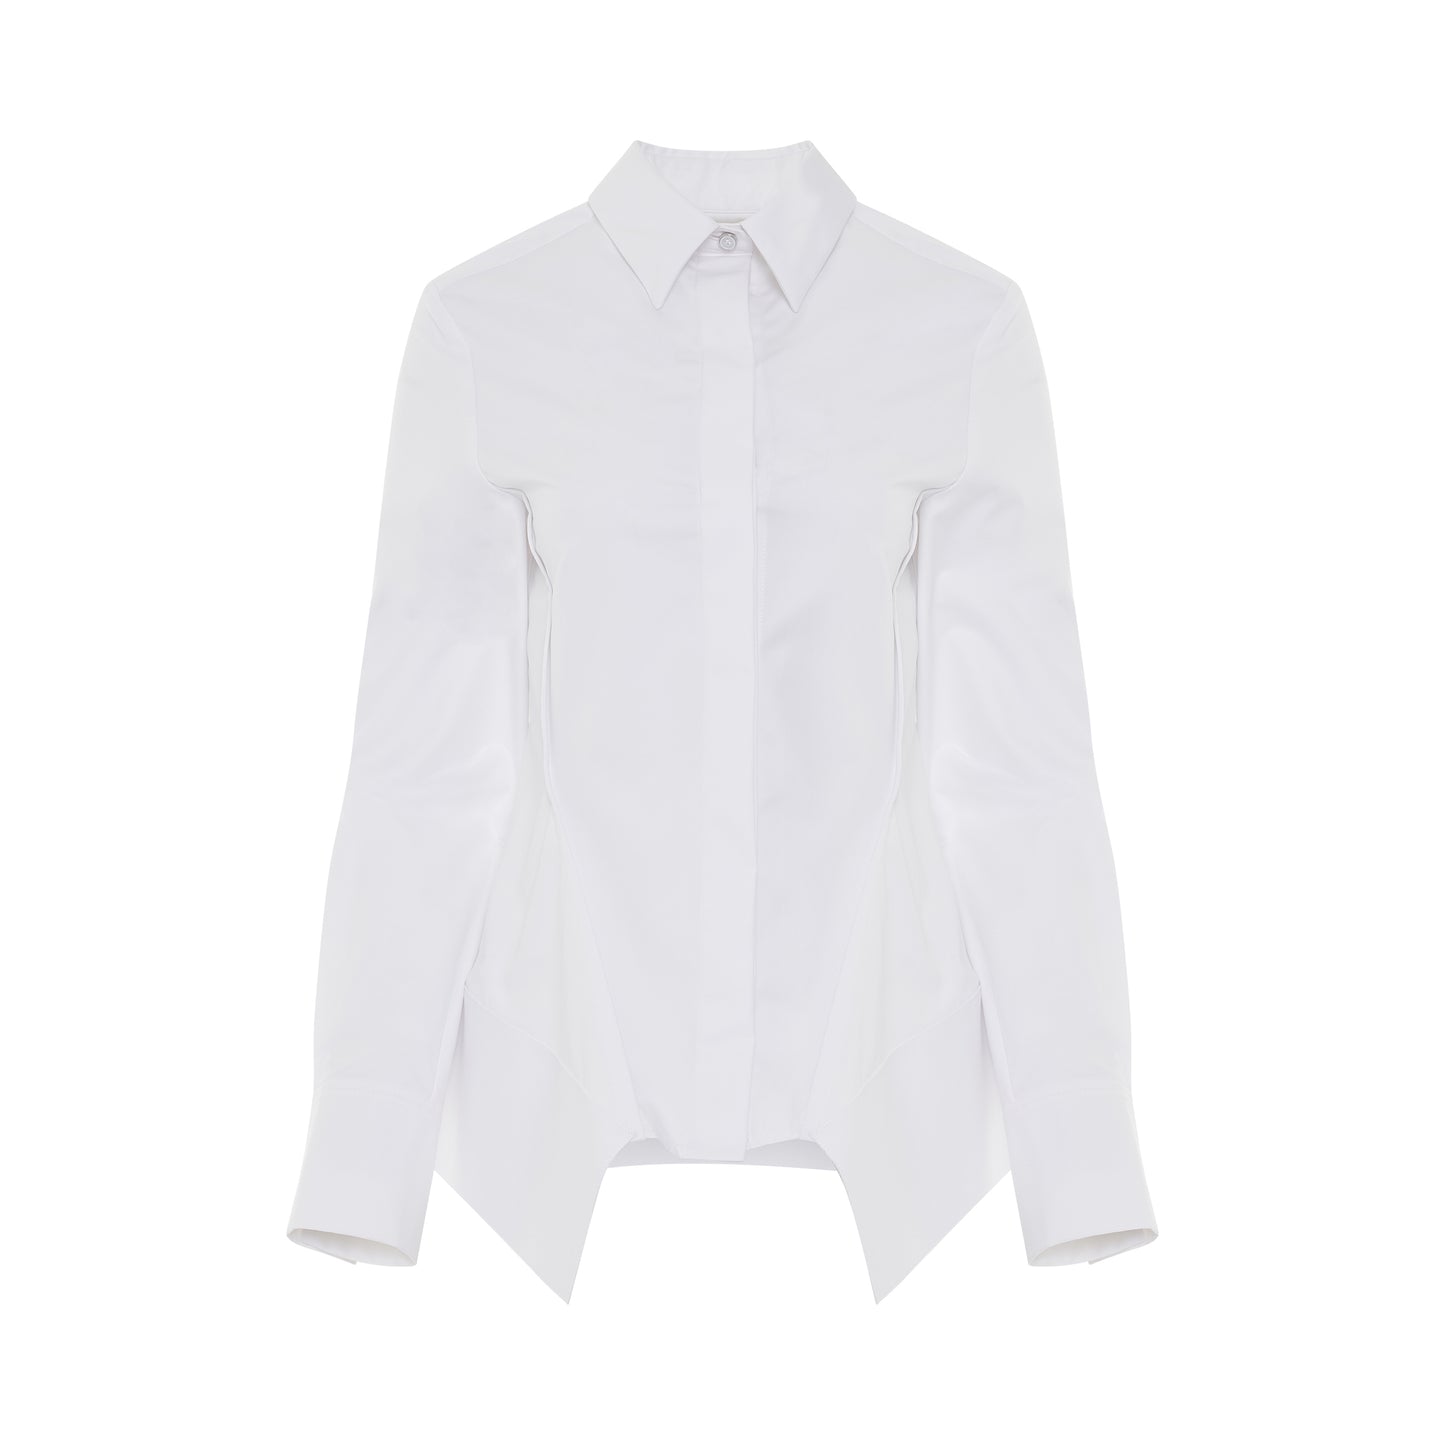 Peplum Long Sleeve Shirt in White